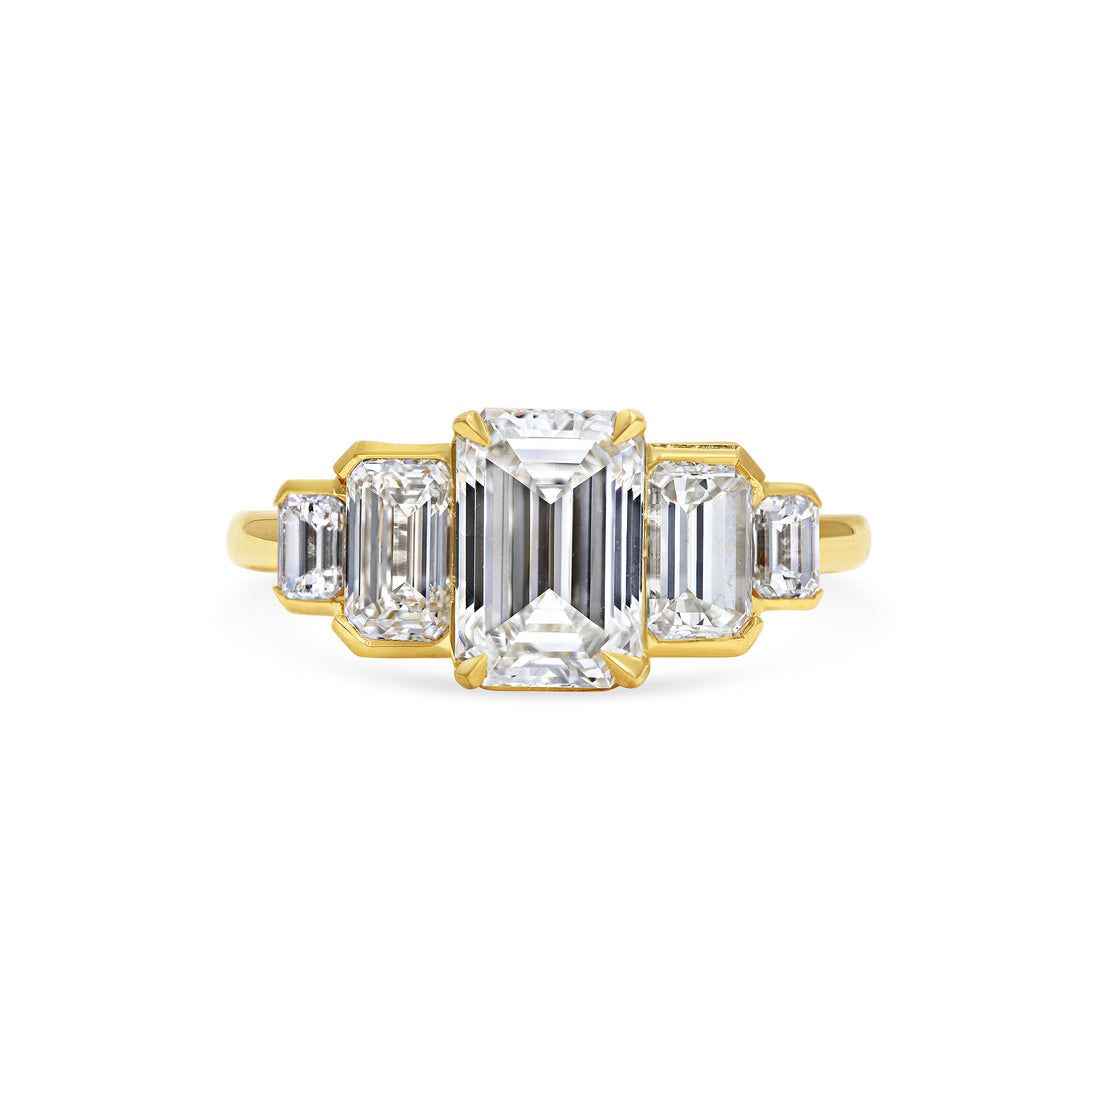  Graduated Emerald Cut Diamond Deco Ring by Rachel Boston | The Cut London